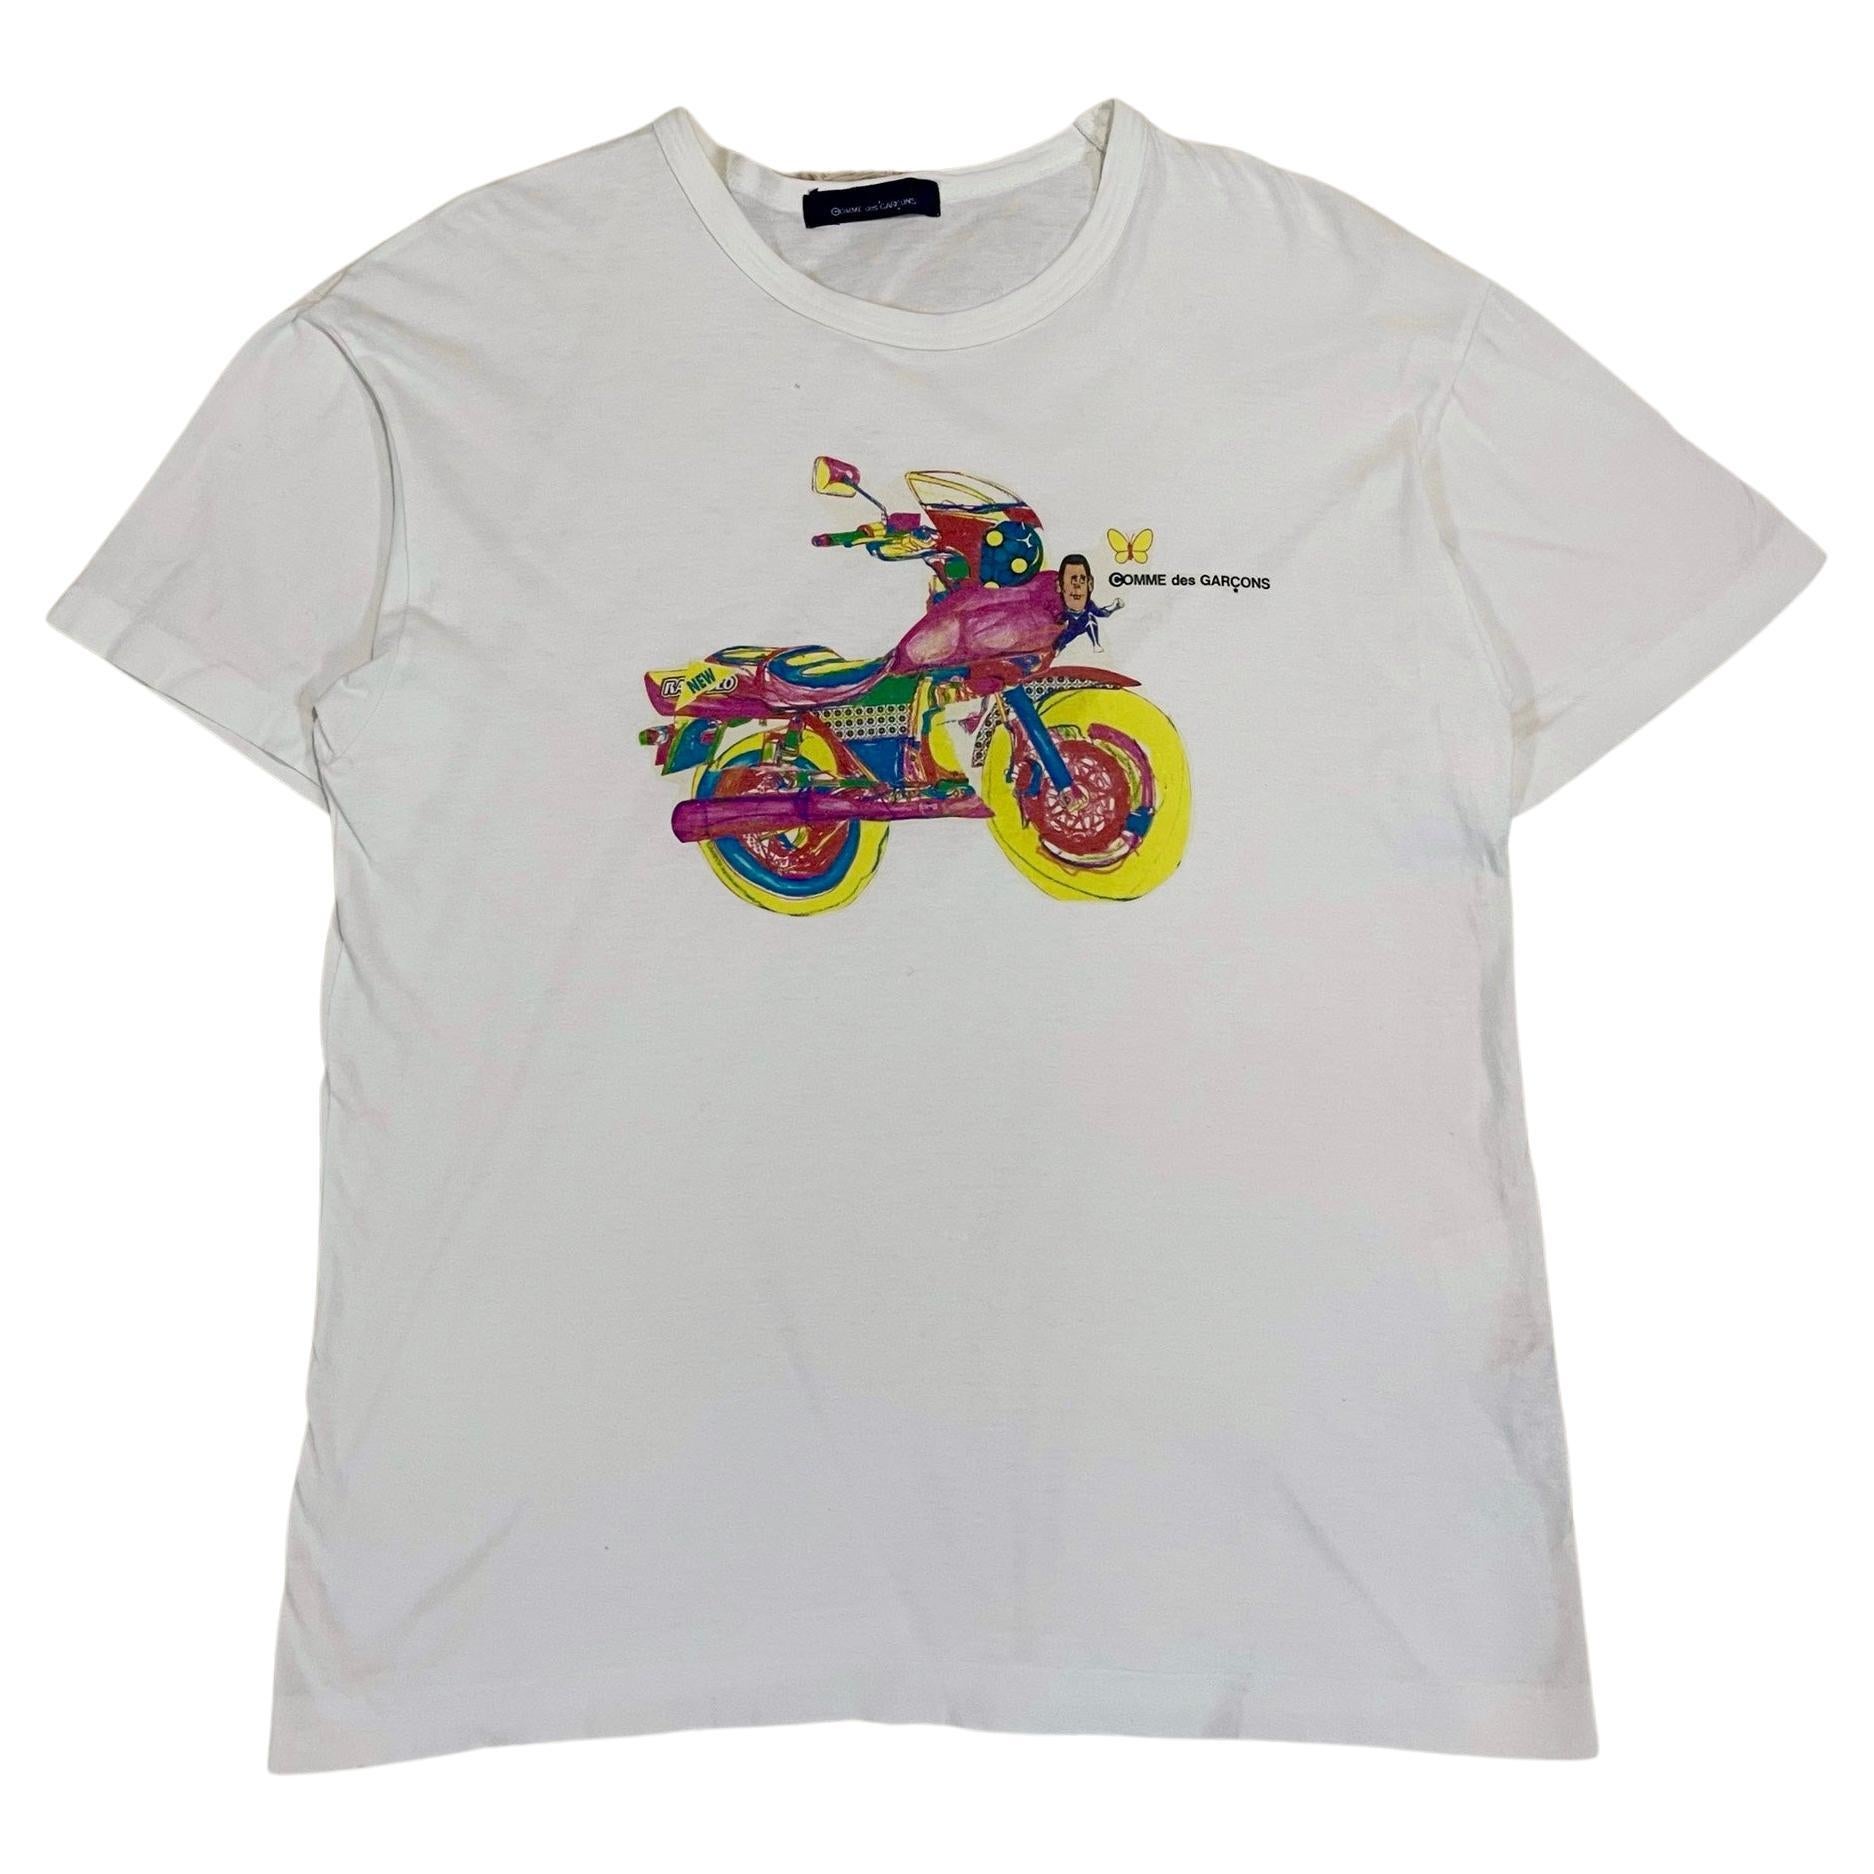 Vintage Comme Des Garcons S/S2000 "Motorbike" T-Shirt For Sale